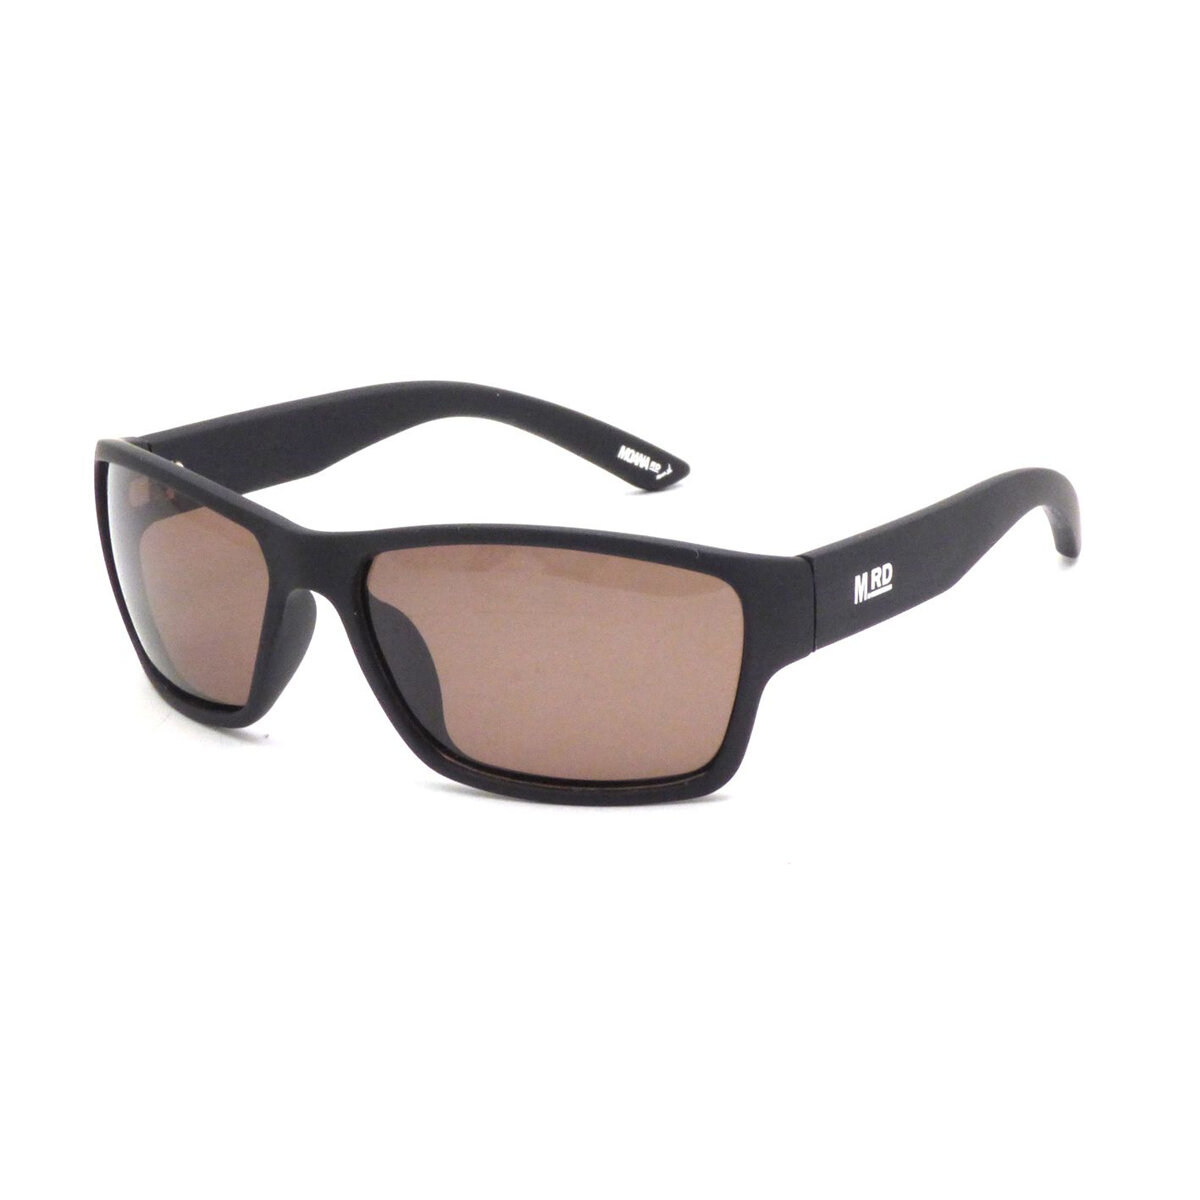 Moana Road Sunglasses + Free Case!, Kids Apprentice Black 3748